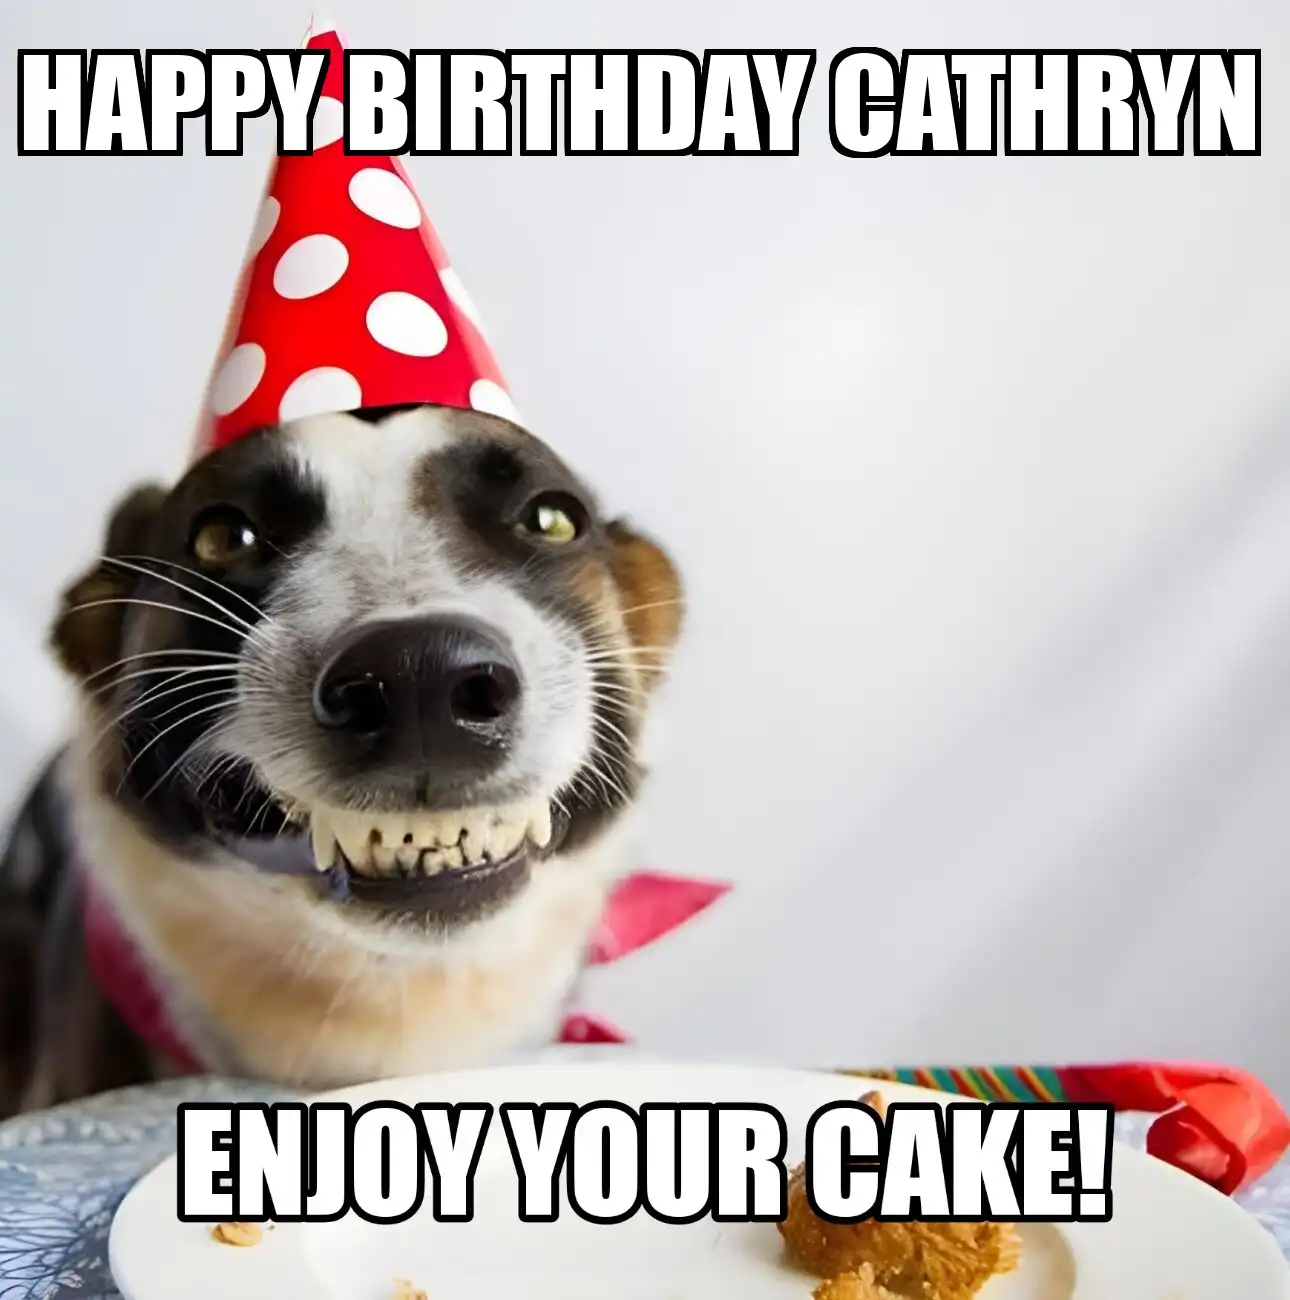 Happy Birthday Cathryn Enjoy Your Cake Dog Meme